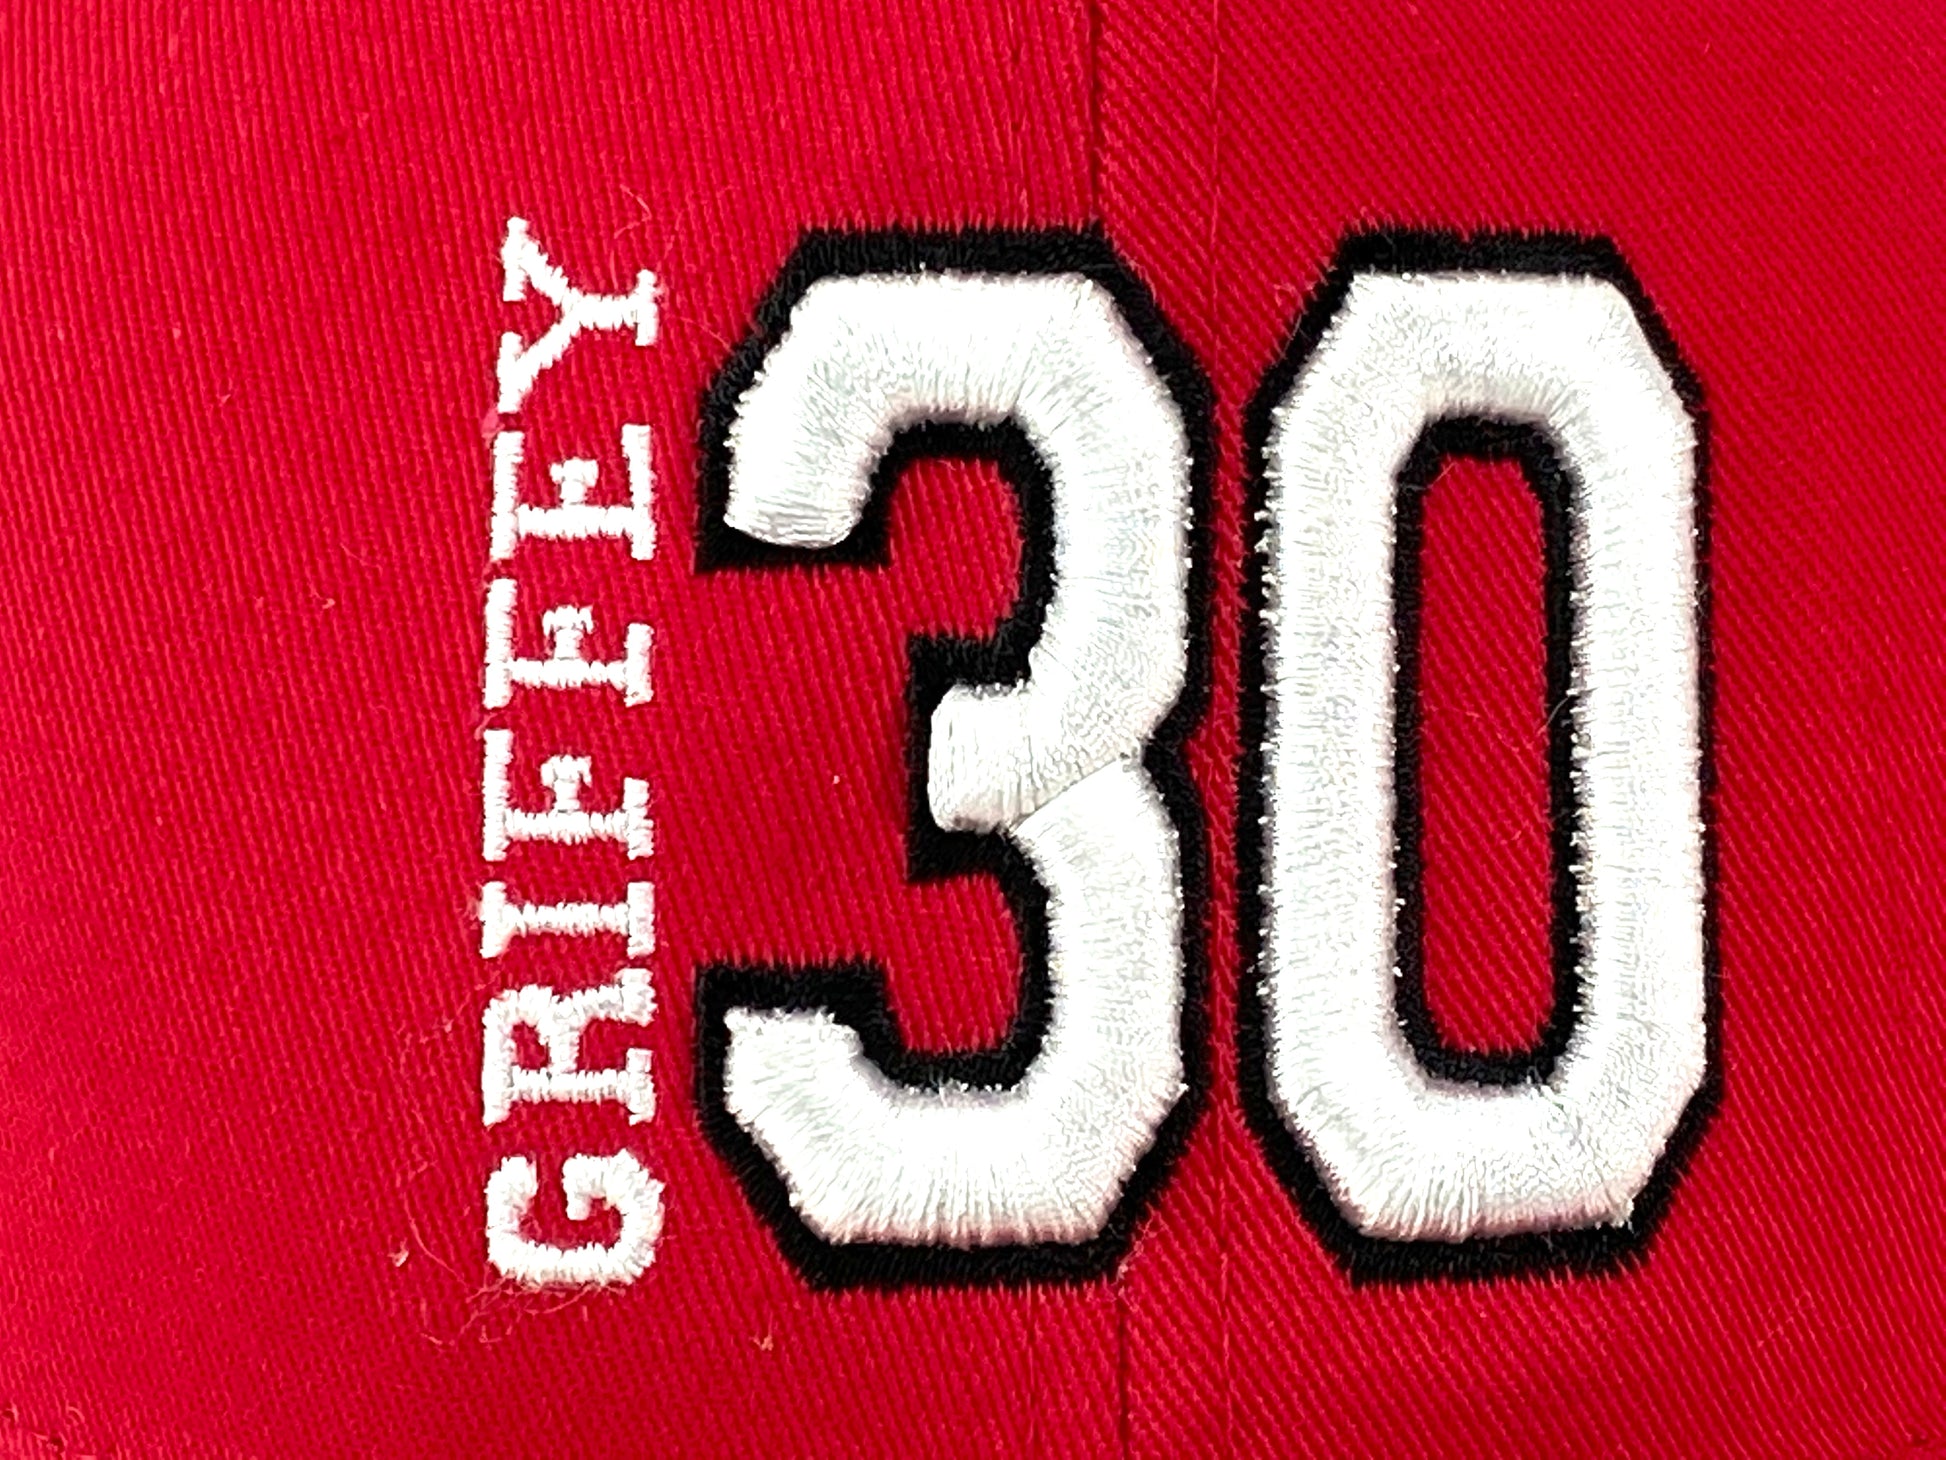 Cincinnati Reds MLB Vintage Ken Griffey Jr. #30 Cap (New)/ D